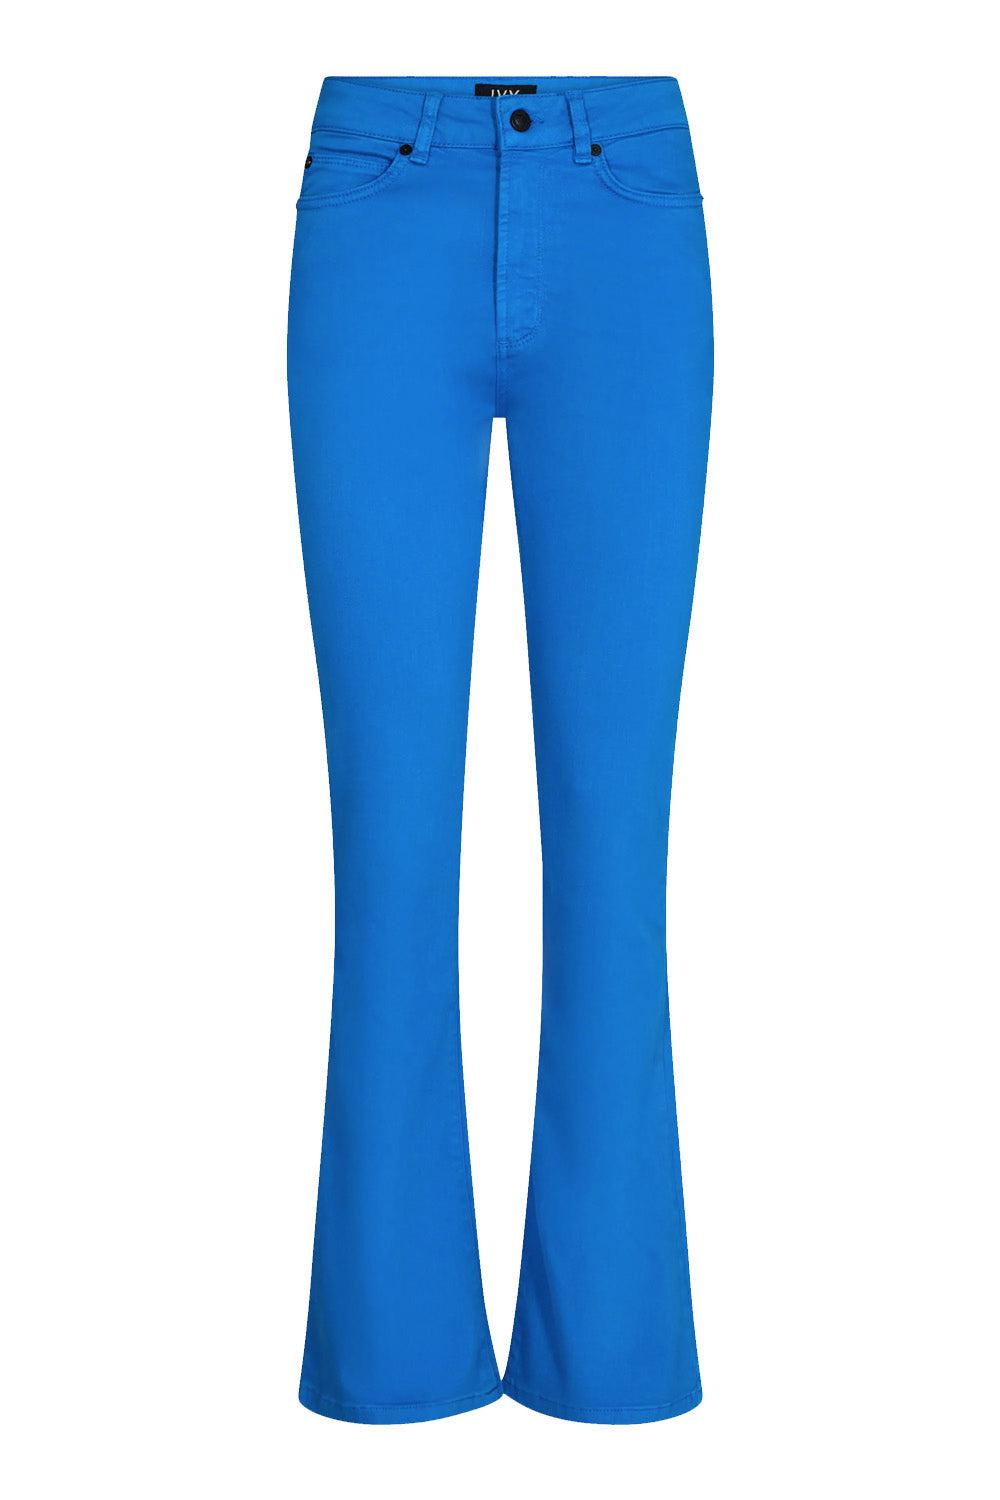 Tara Jeans Color Royal Blue 32'